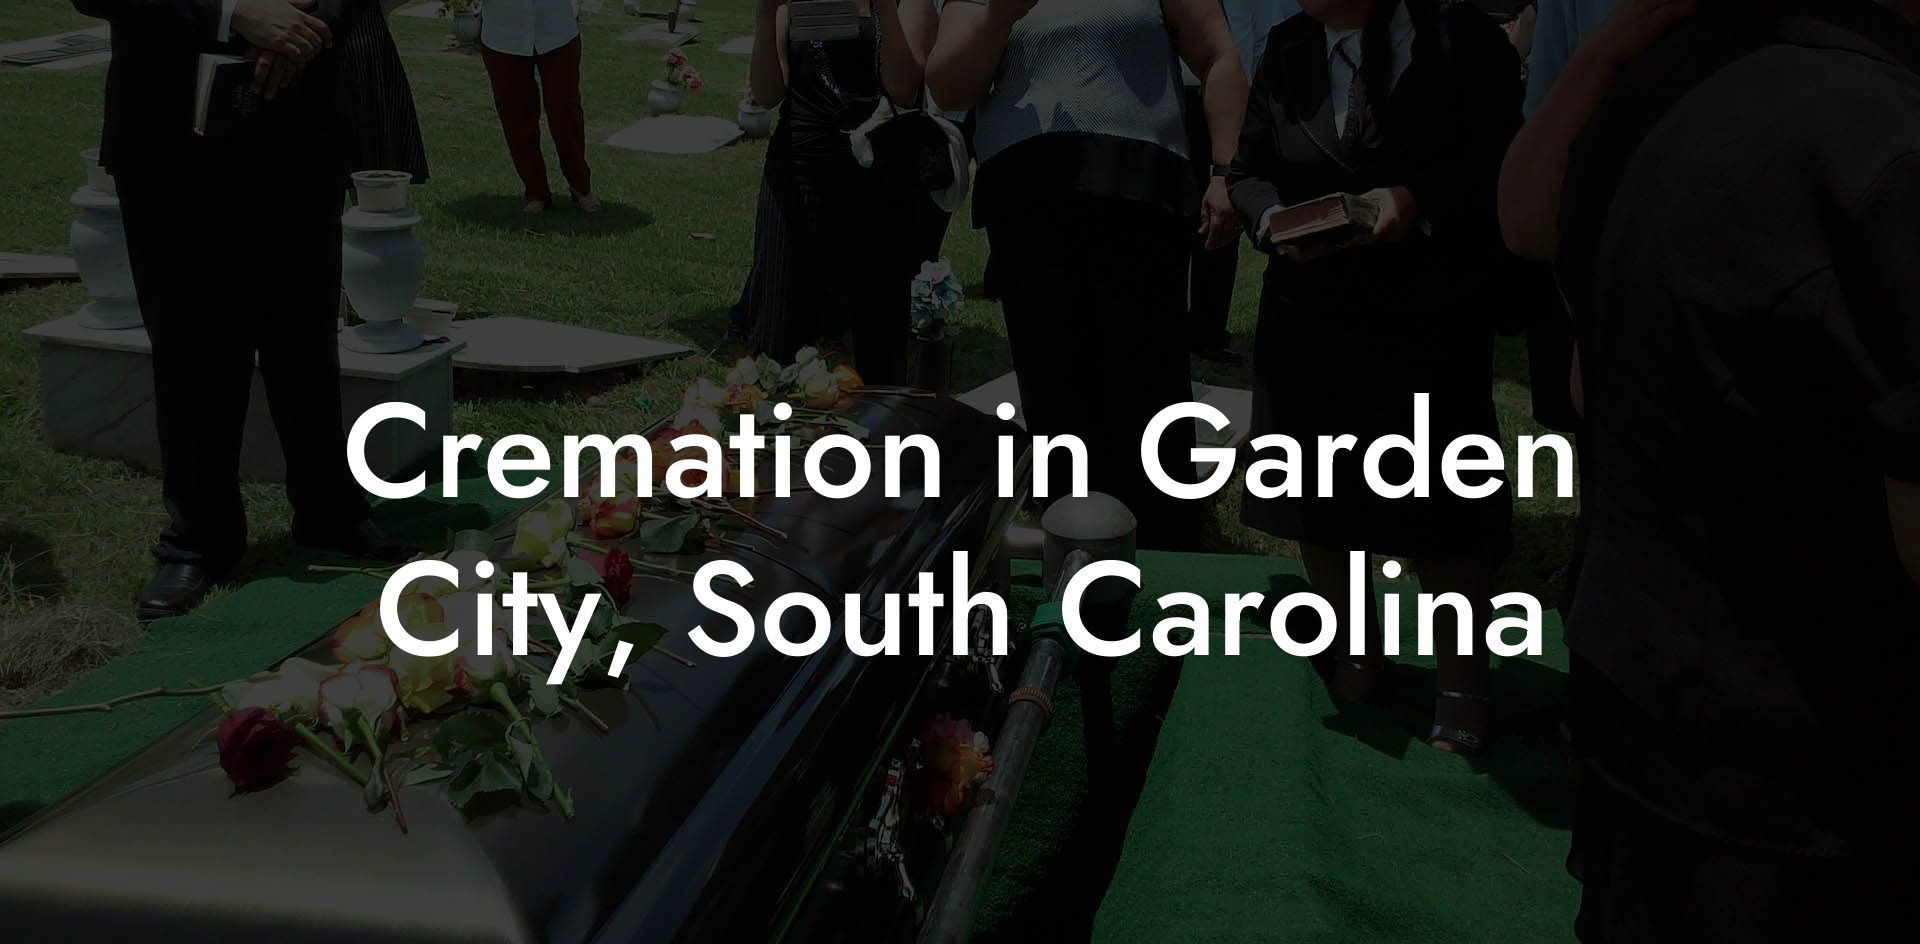 Cremation in Garden City, South Carolina